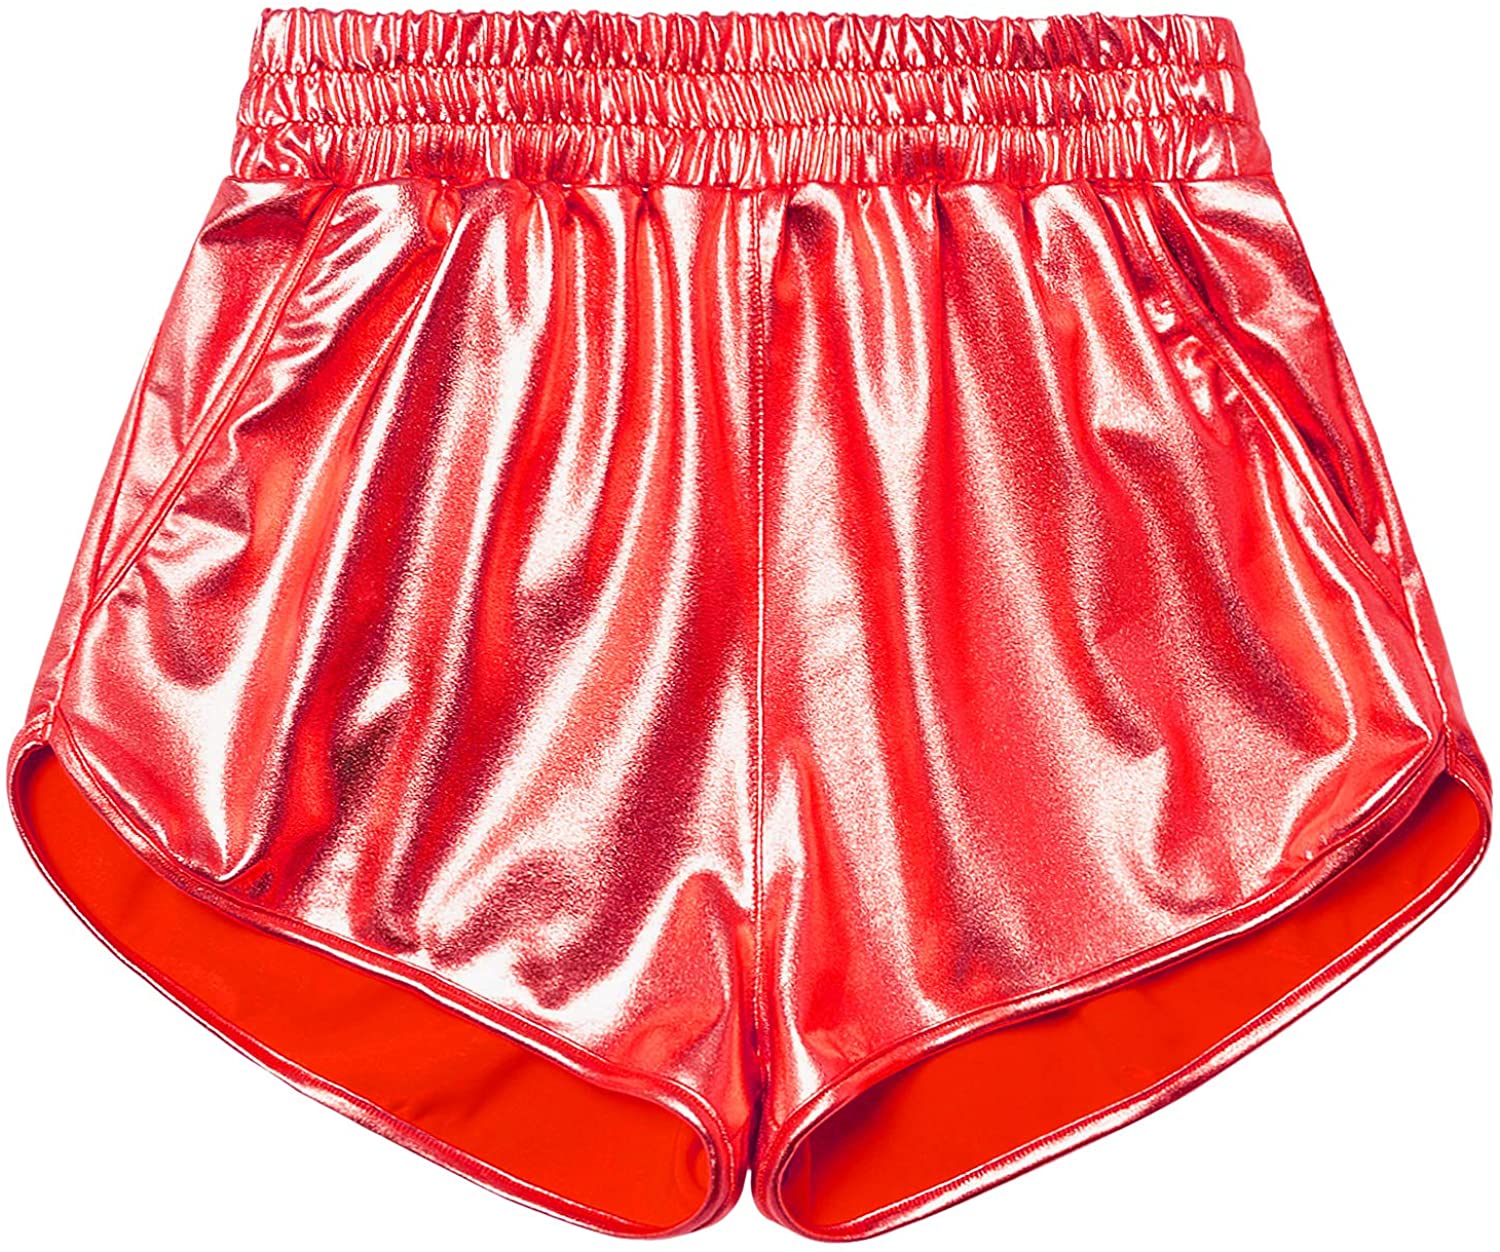 Mirawise Girls Metallic Shorts Shiny Hot Pants Sparkly Dance Outfits Short Pants 